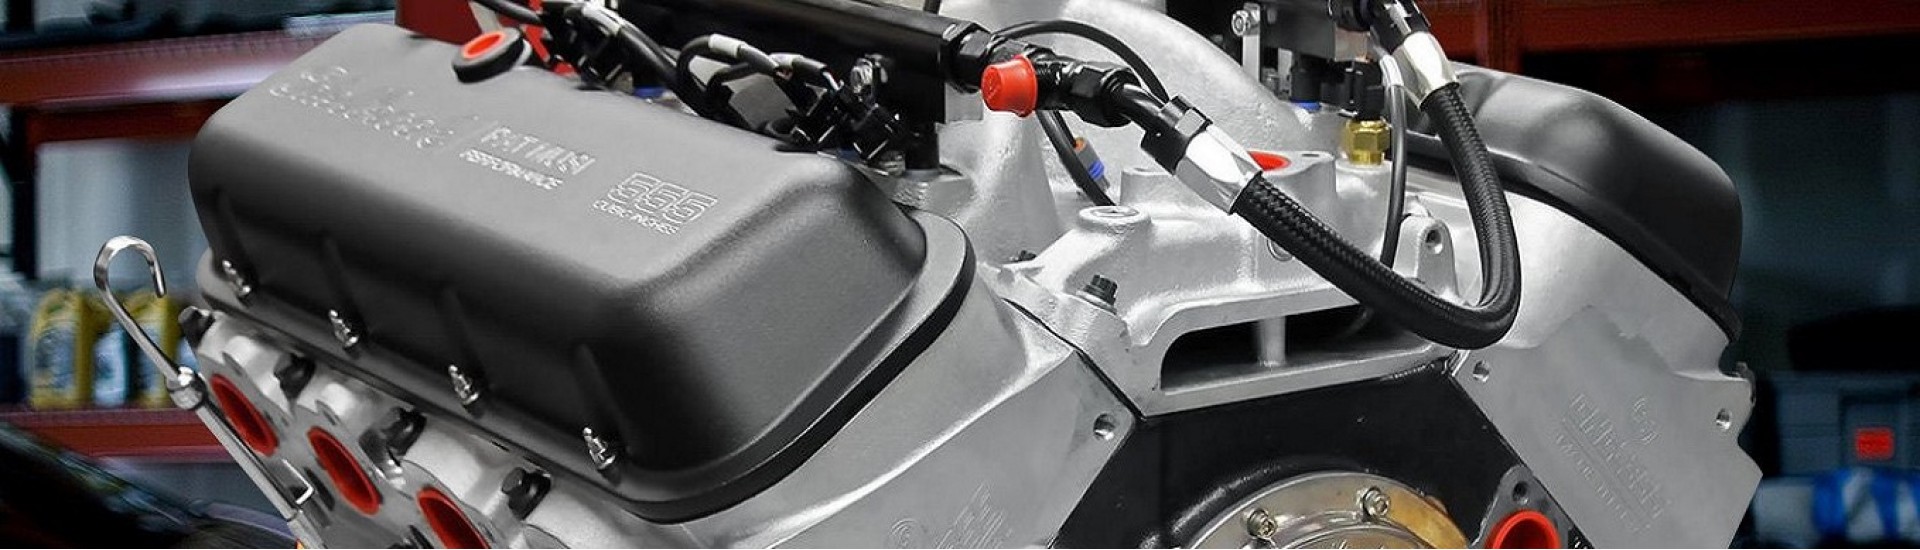 موتور اسپرت بنز ای ام جی جی تی 63 S 2019 